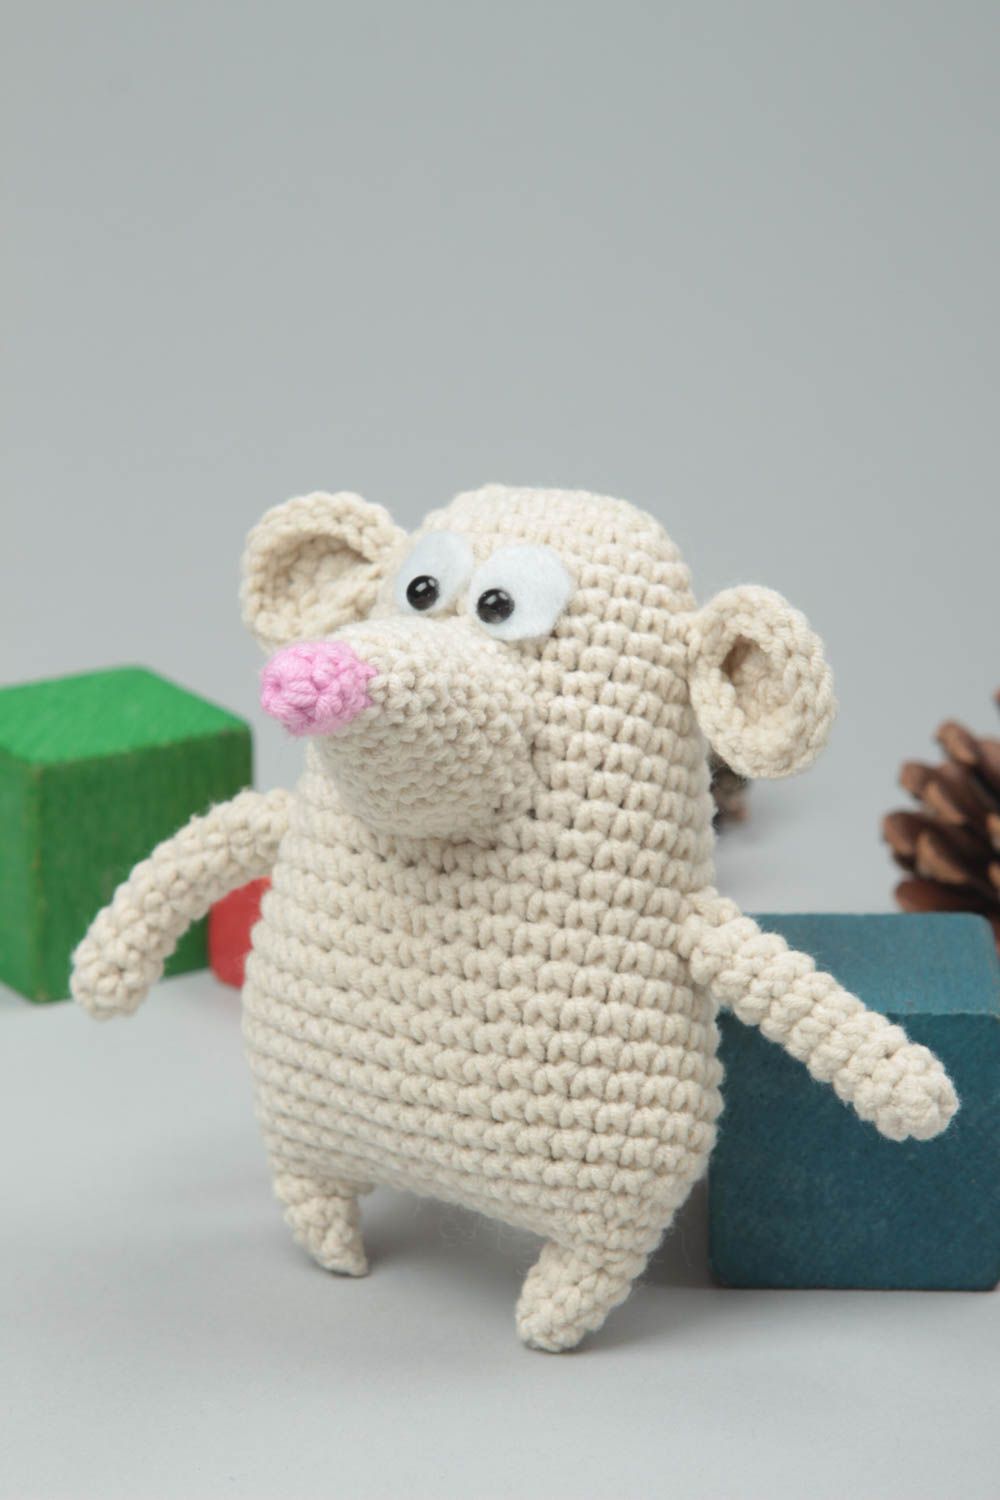 Handmade cute white toy unusual crocheted stylish toy interior decor toy photo 1